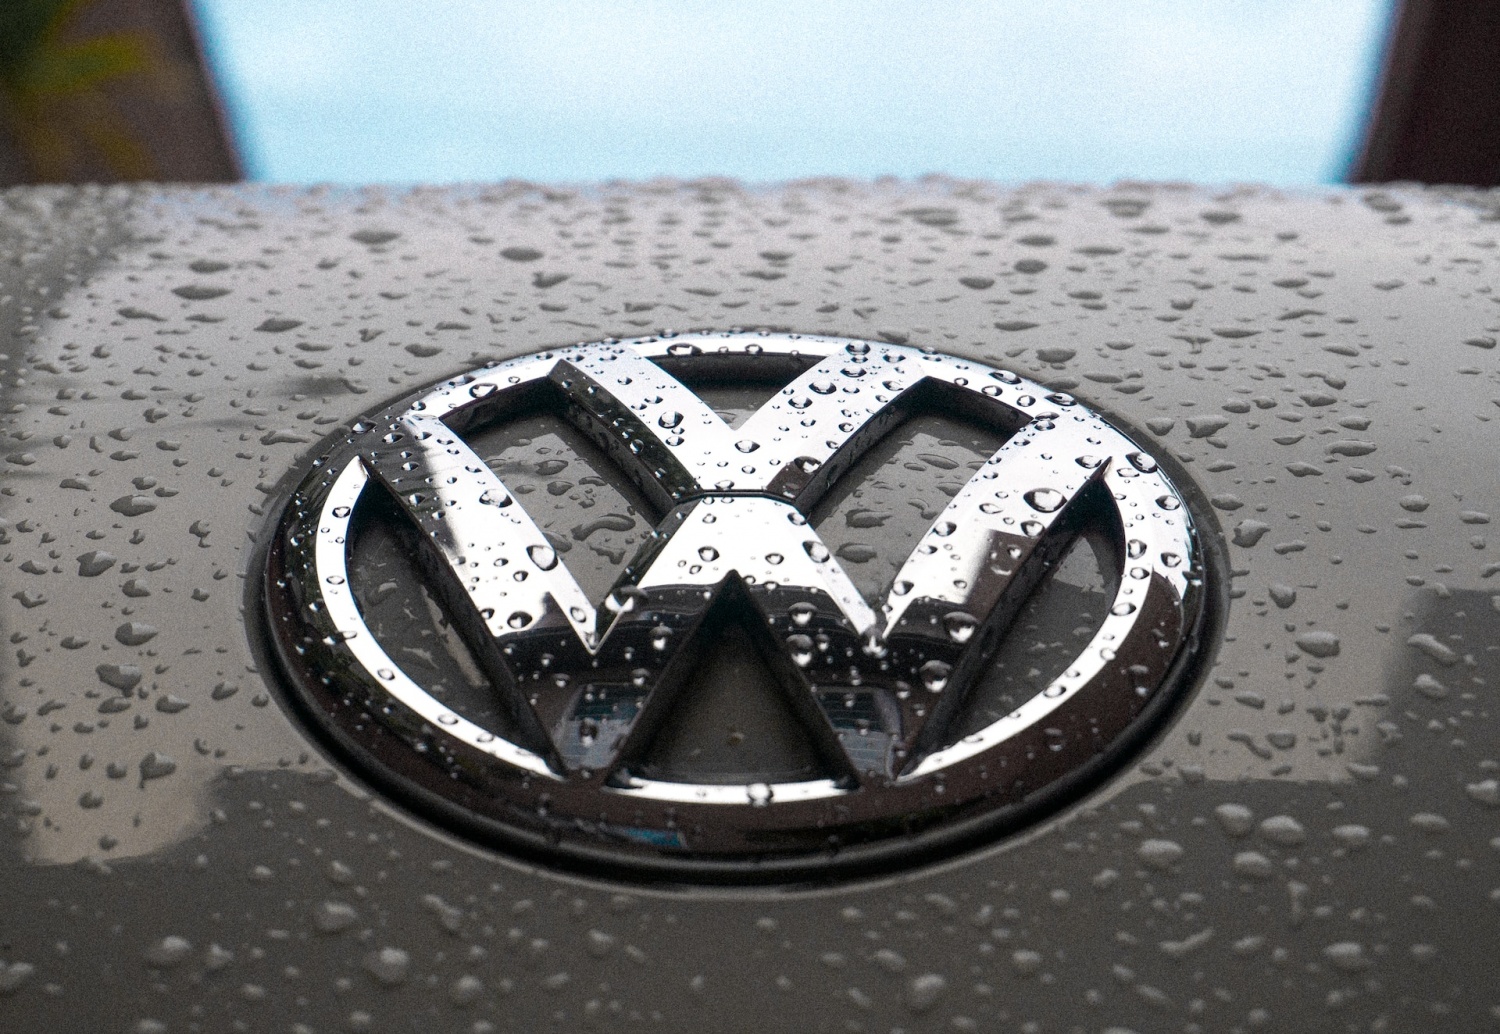 Volkswagen Revises Back Buttons Following Complaints About its Touchscreen-Heavy Design